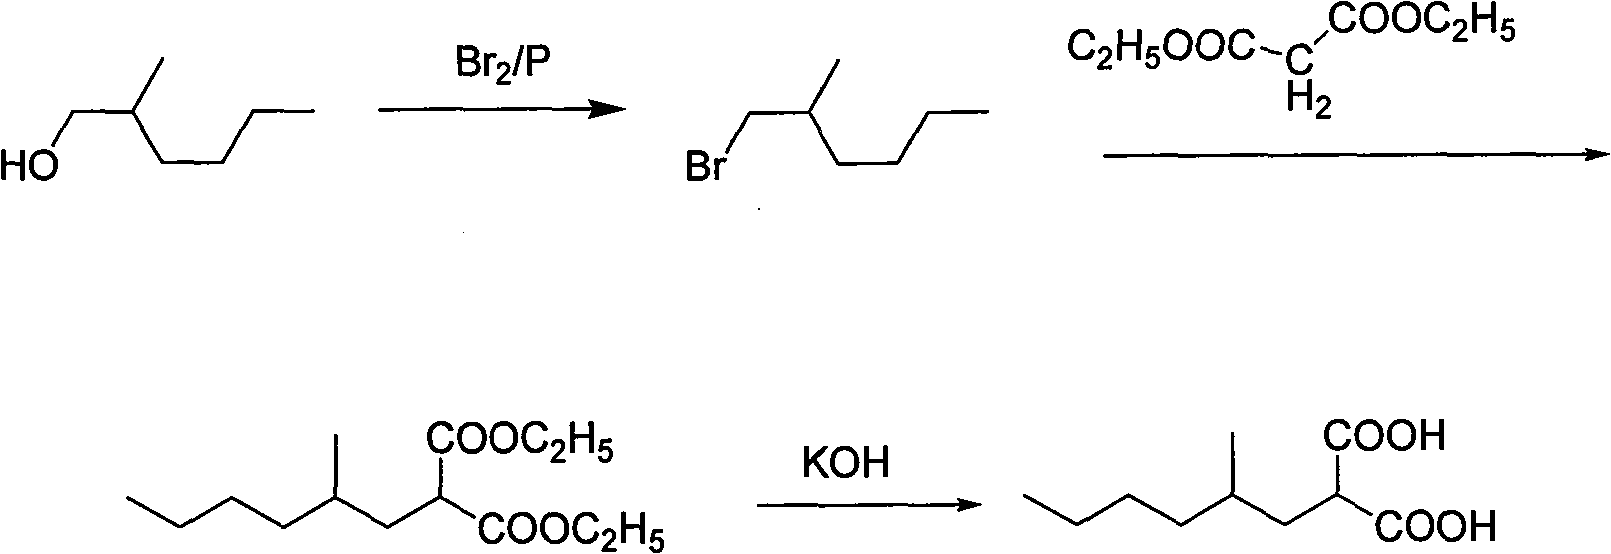 Process for preparing 4-methyl caprylic acid